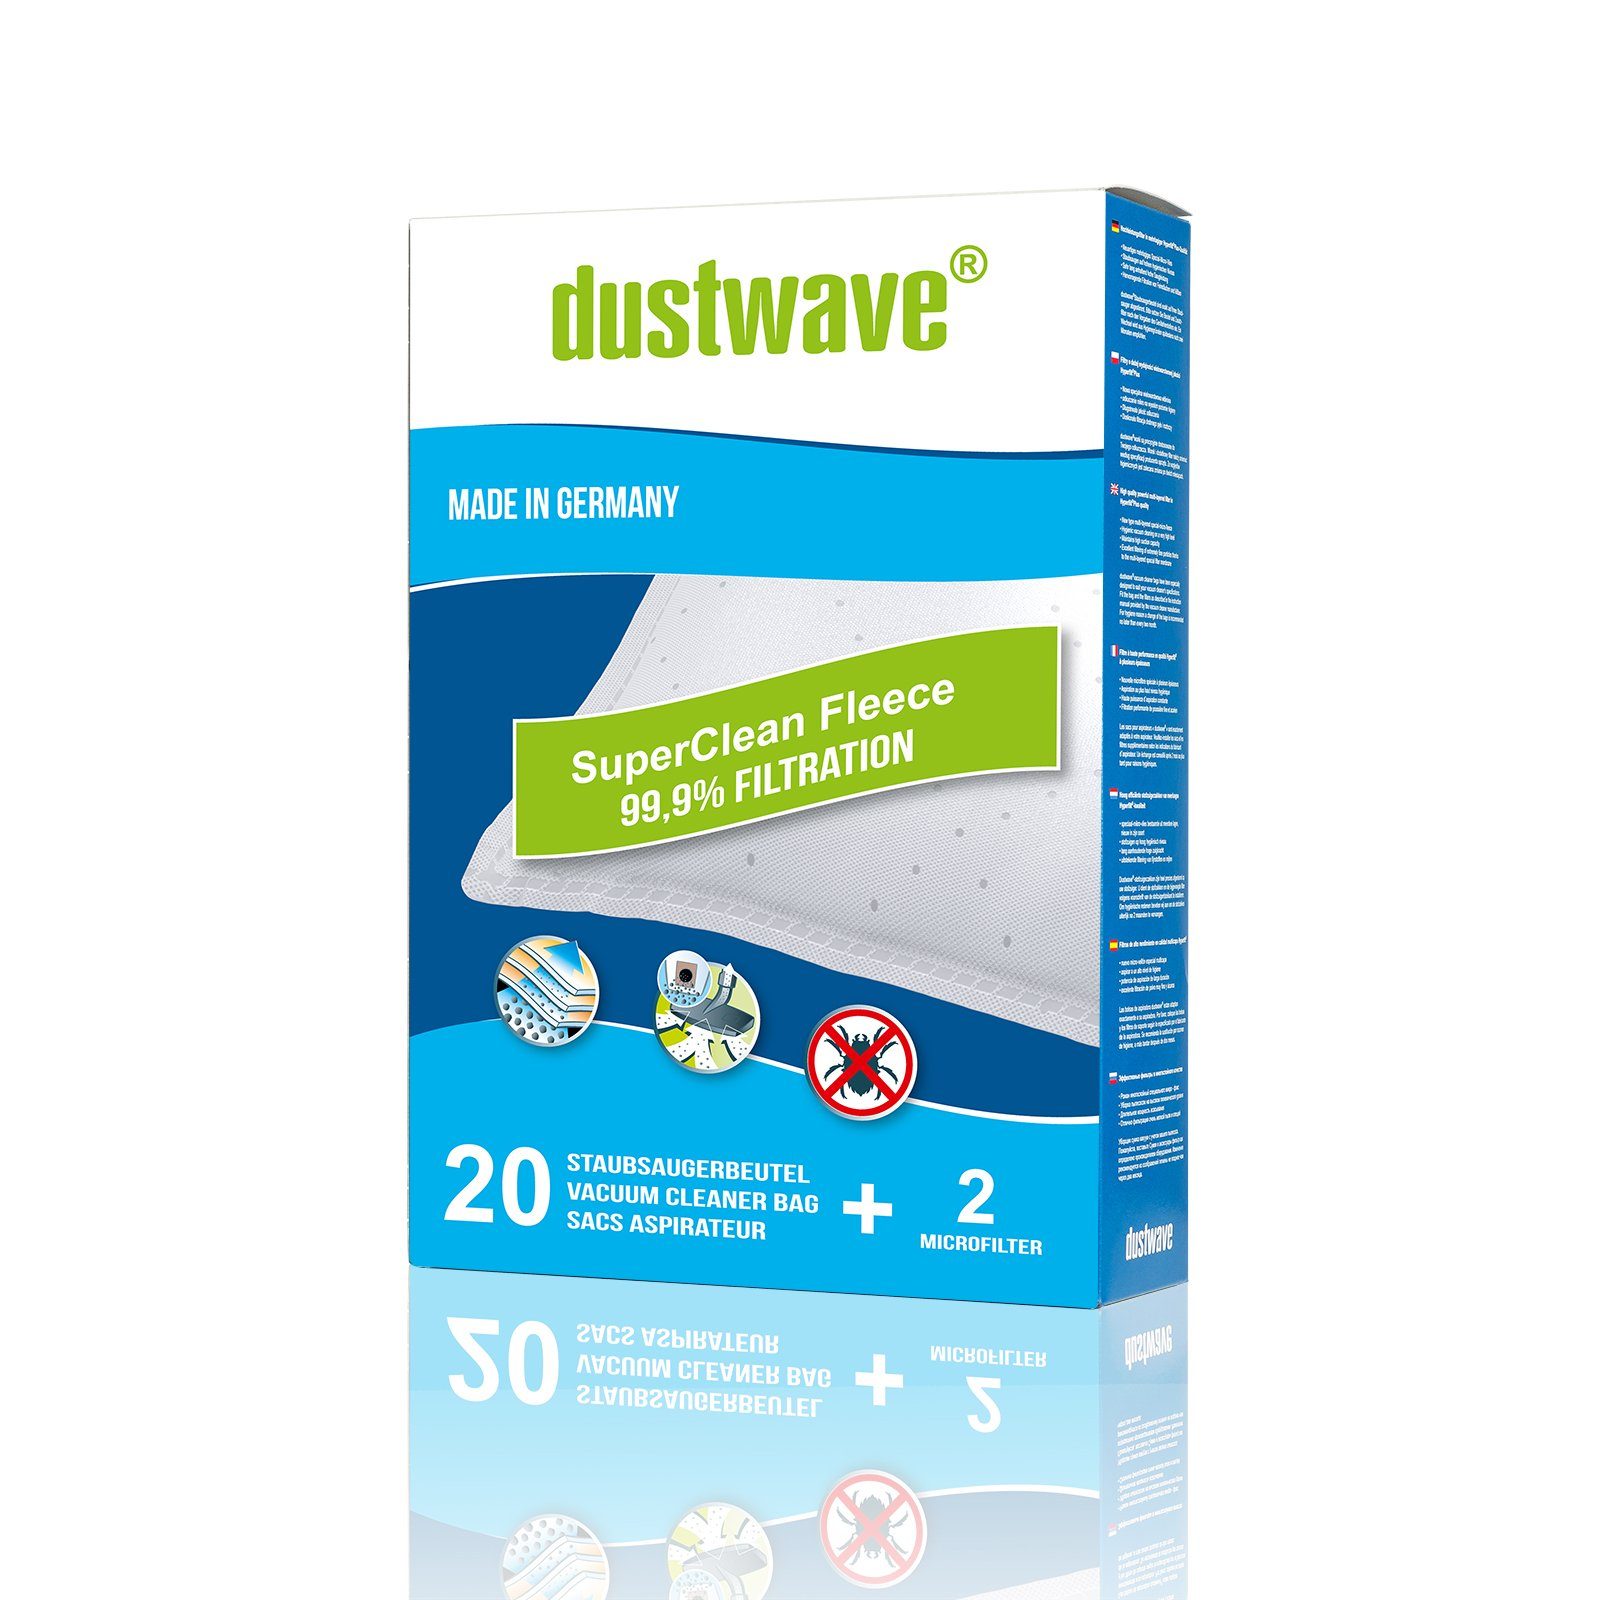 Dustwave Staubsaugerbeutel Megapack, passend für Adix DIV 220 / DIV220, 20 St., Megapack, 20 Staubsaugerbeutel + 2 Hepa-Filter (ca. 15x15cm - zuschneidbar) Adix DIV 220 / DIV220 - Standard